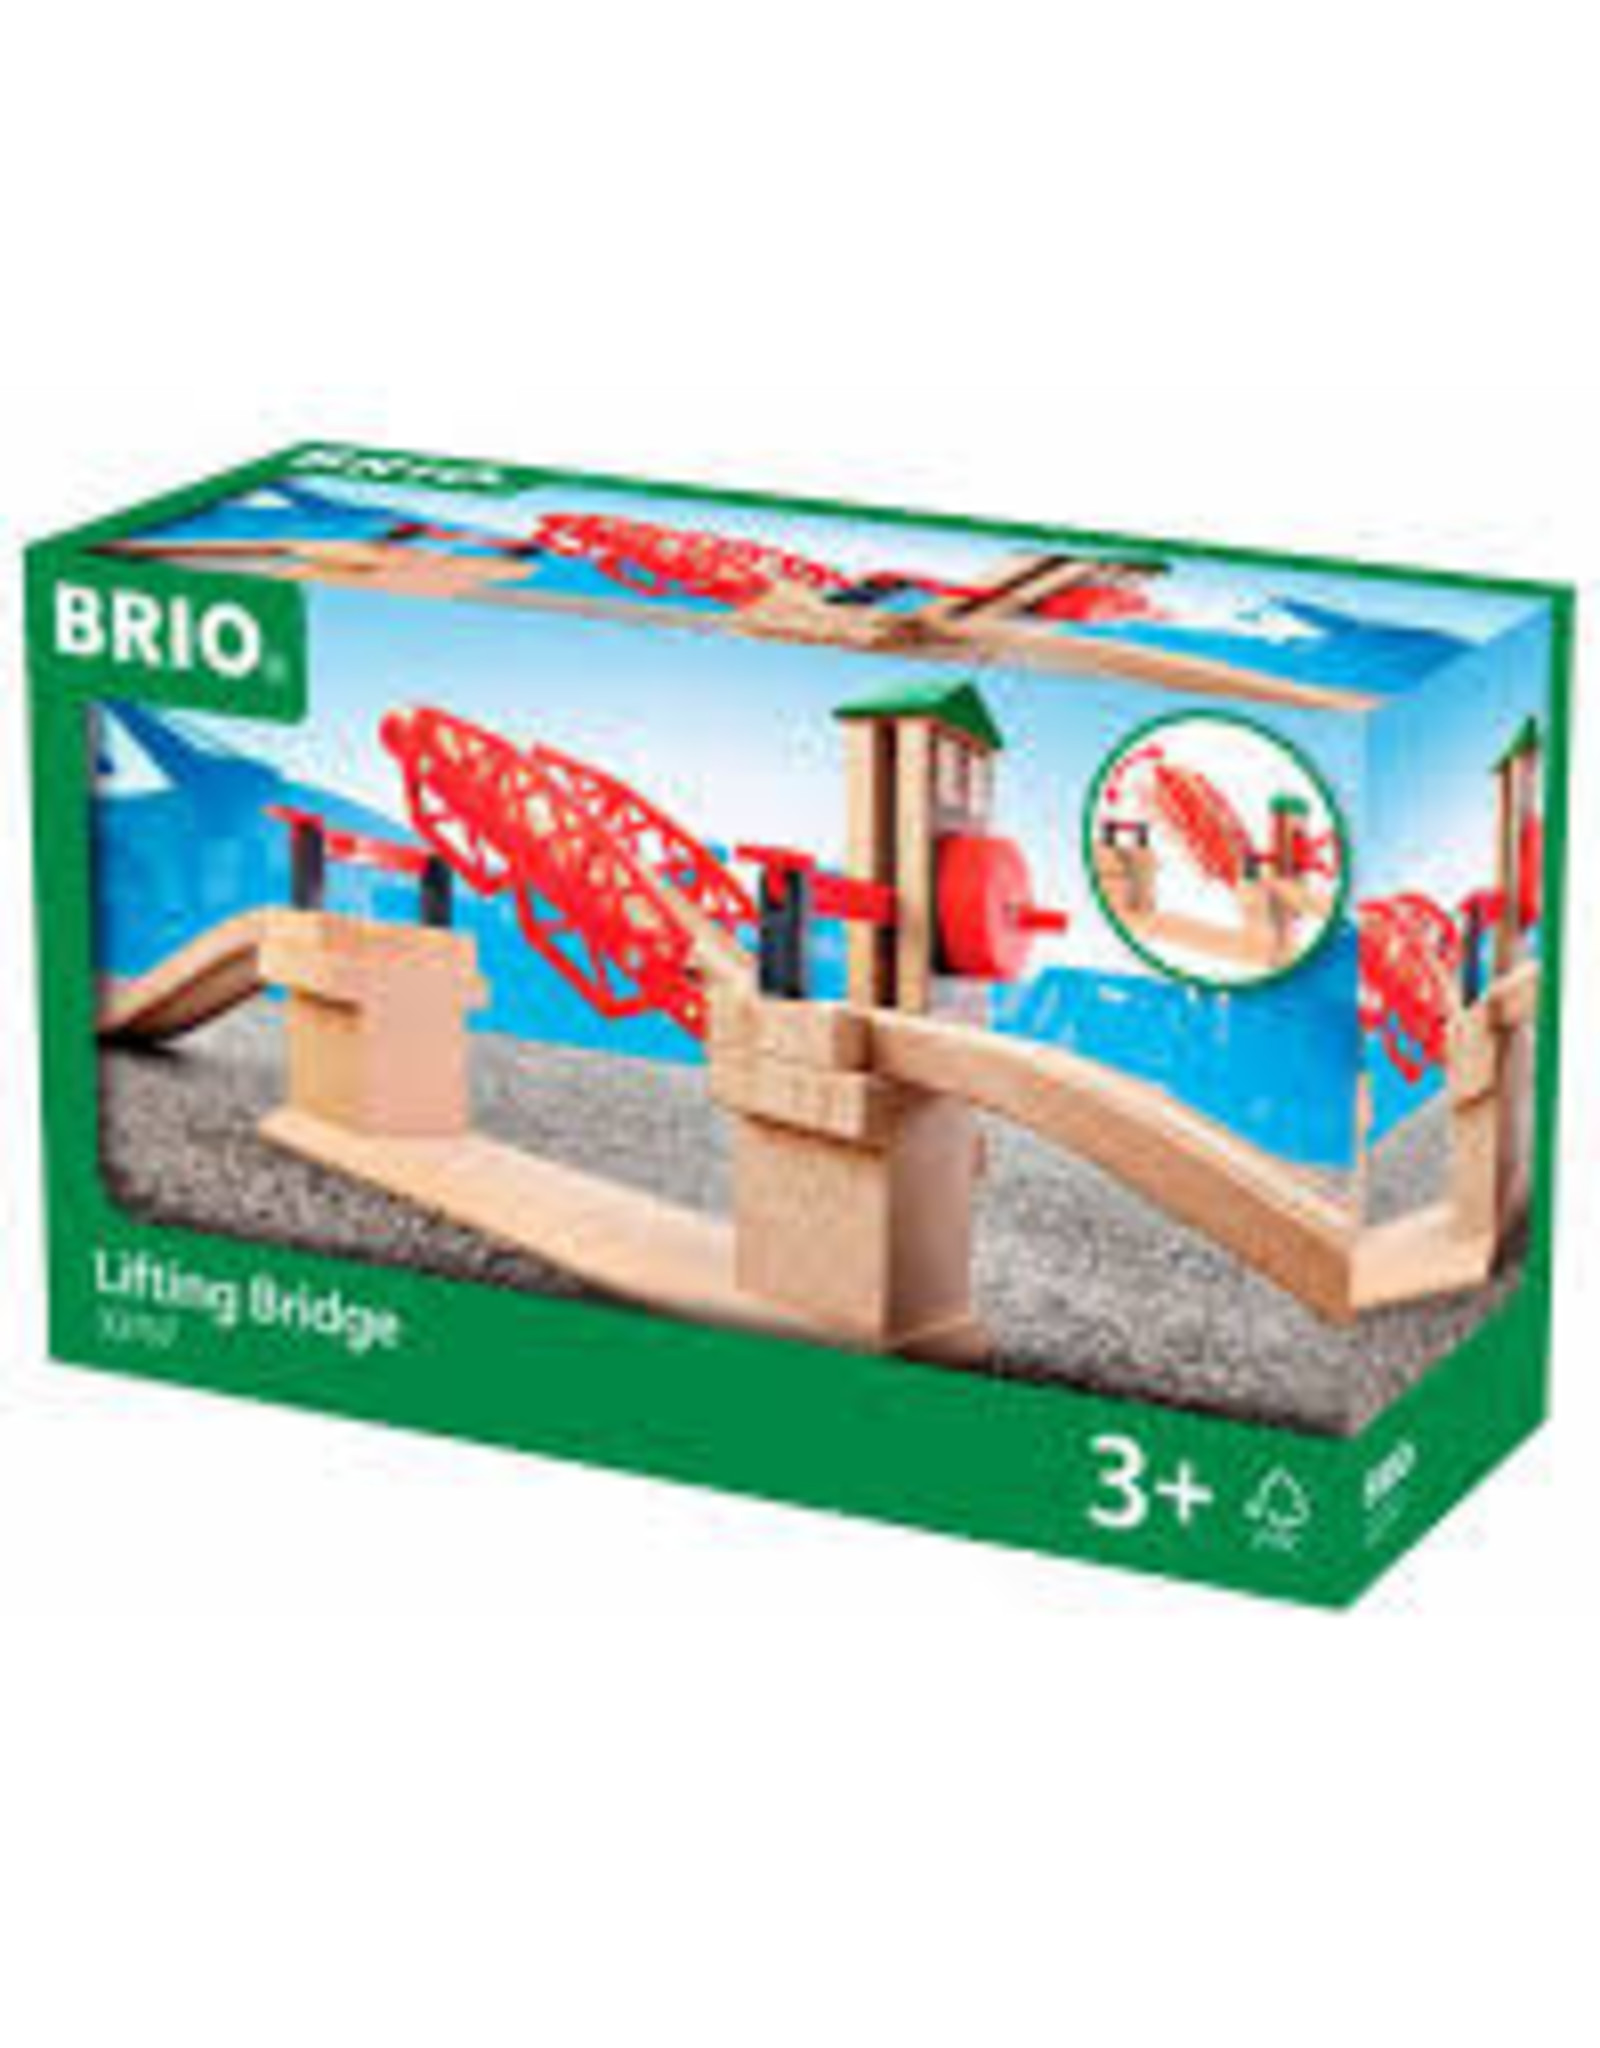 Ravensburger BRIO Lifting Bridge